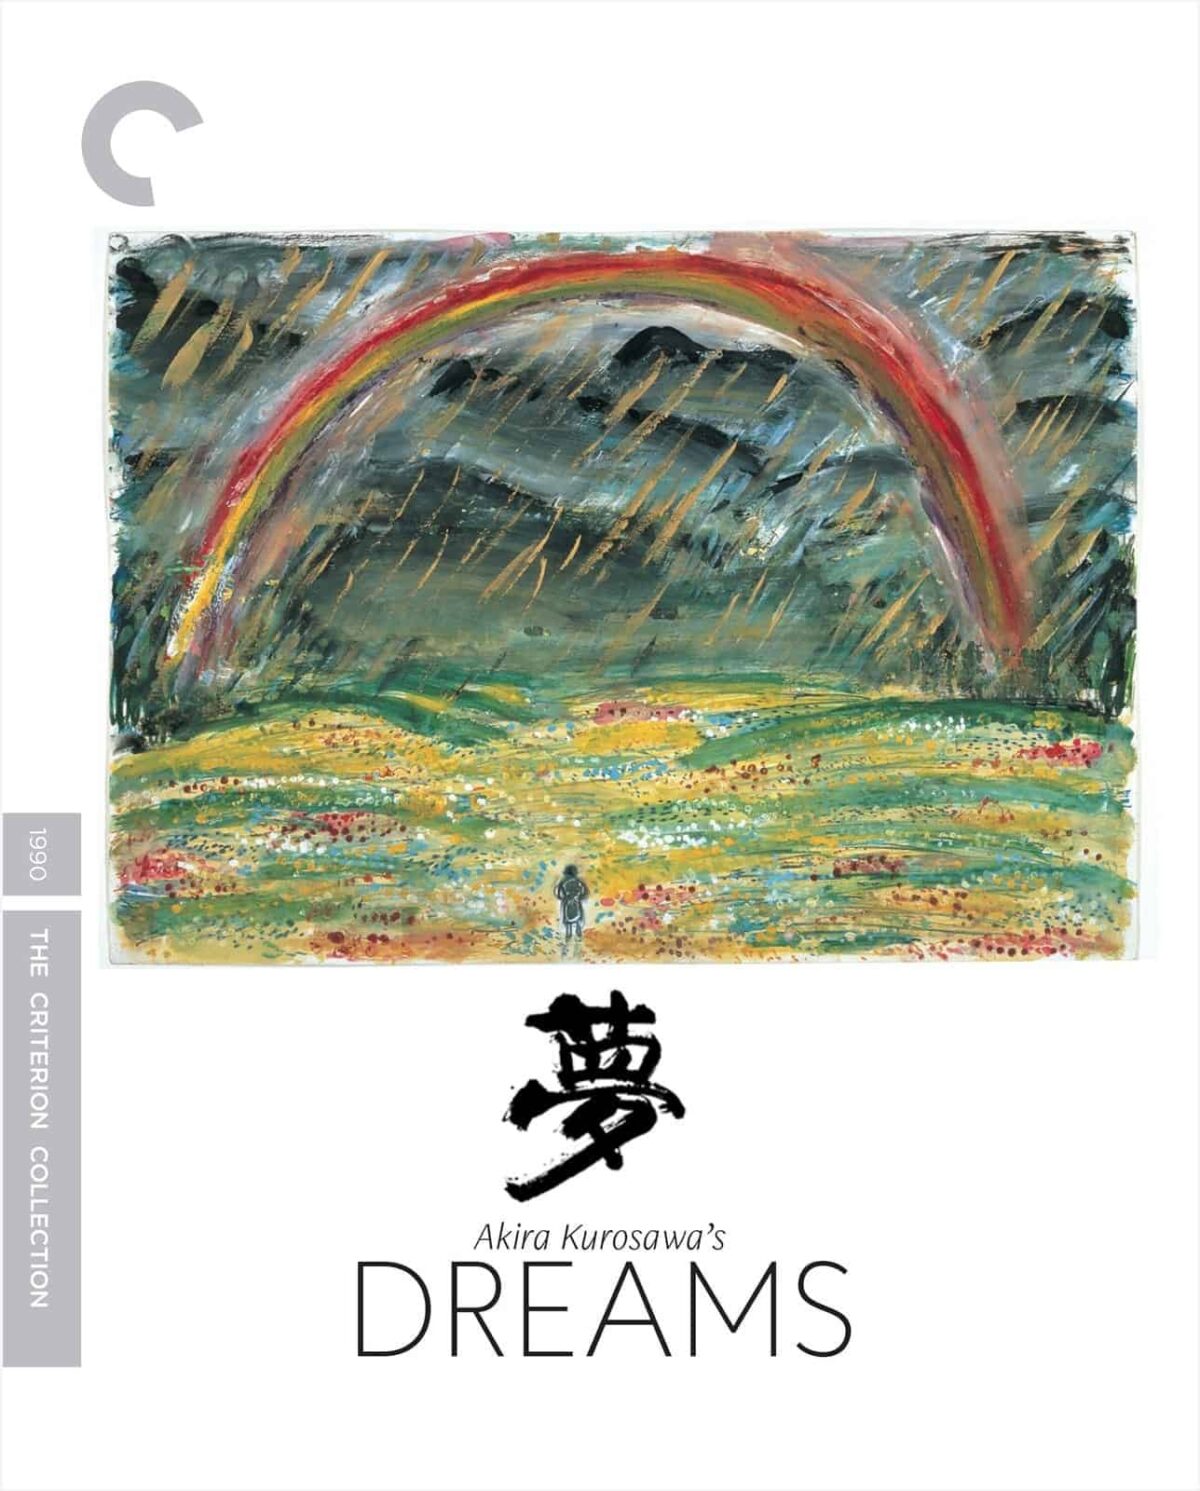 Poster for the movie Dreams by Akira Kurosawa